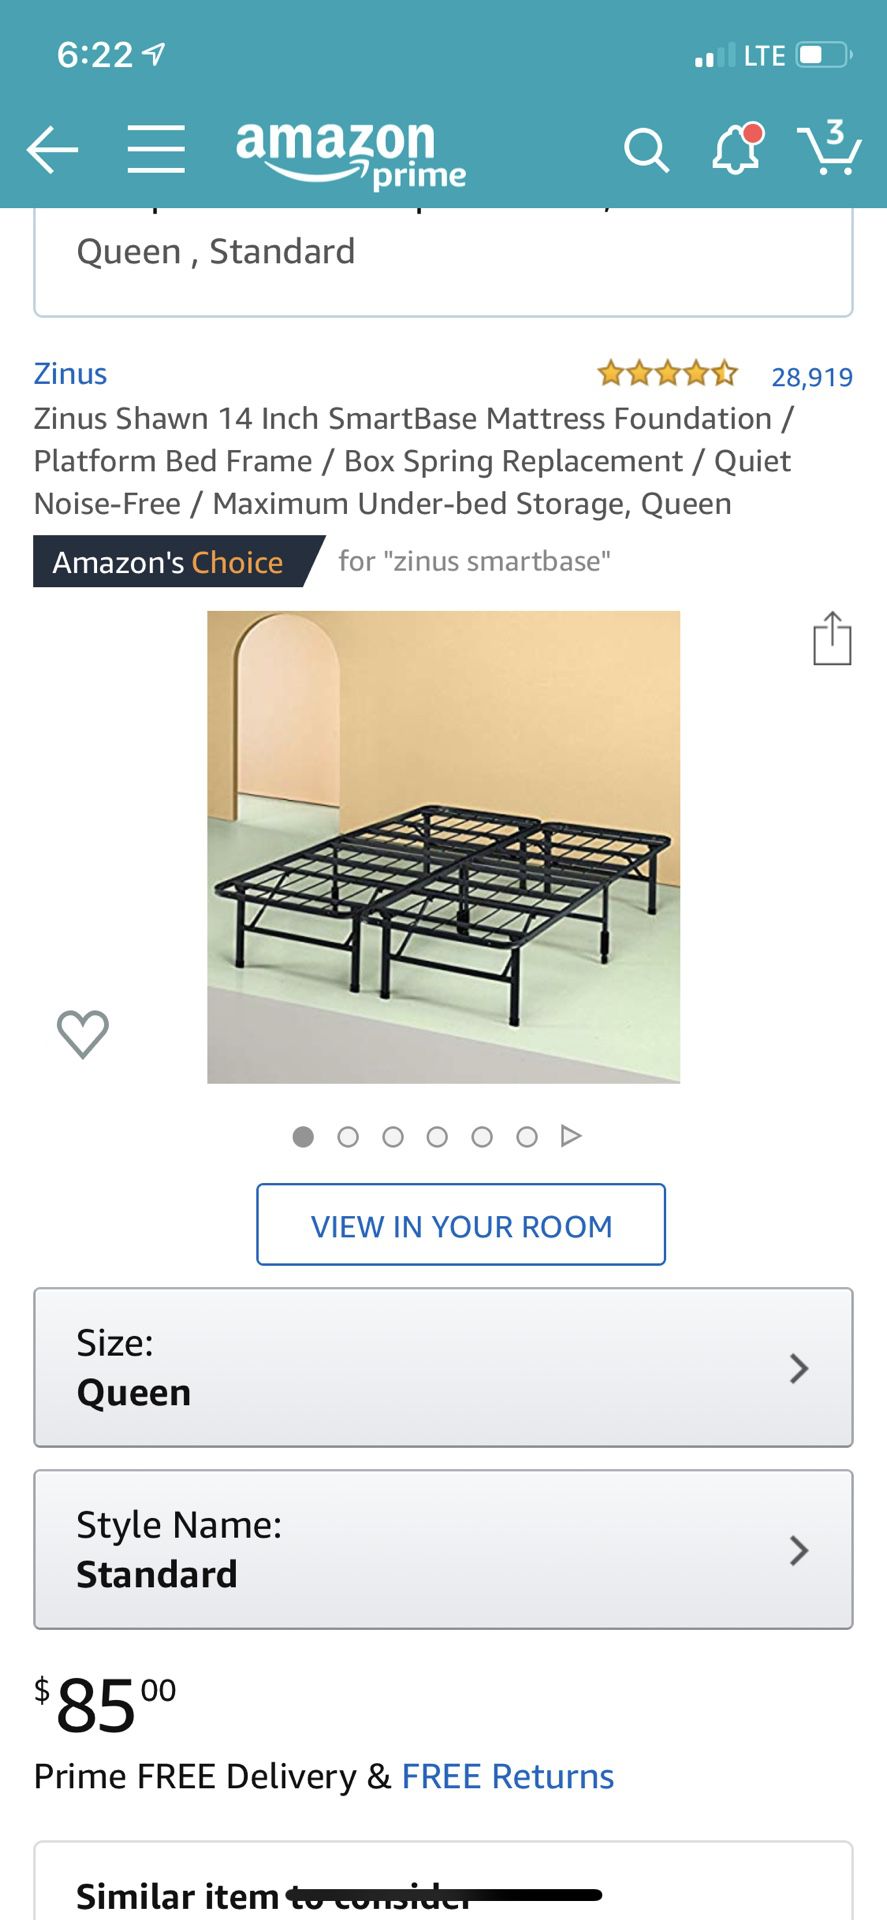 Queen Zinus Shawn 14 inch SmartBase/platform bed frame